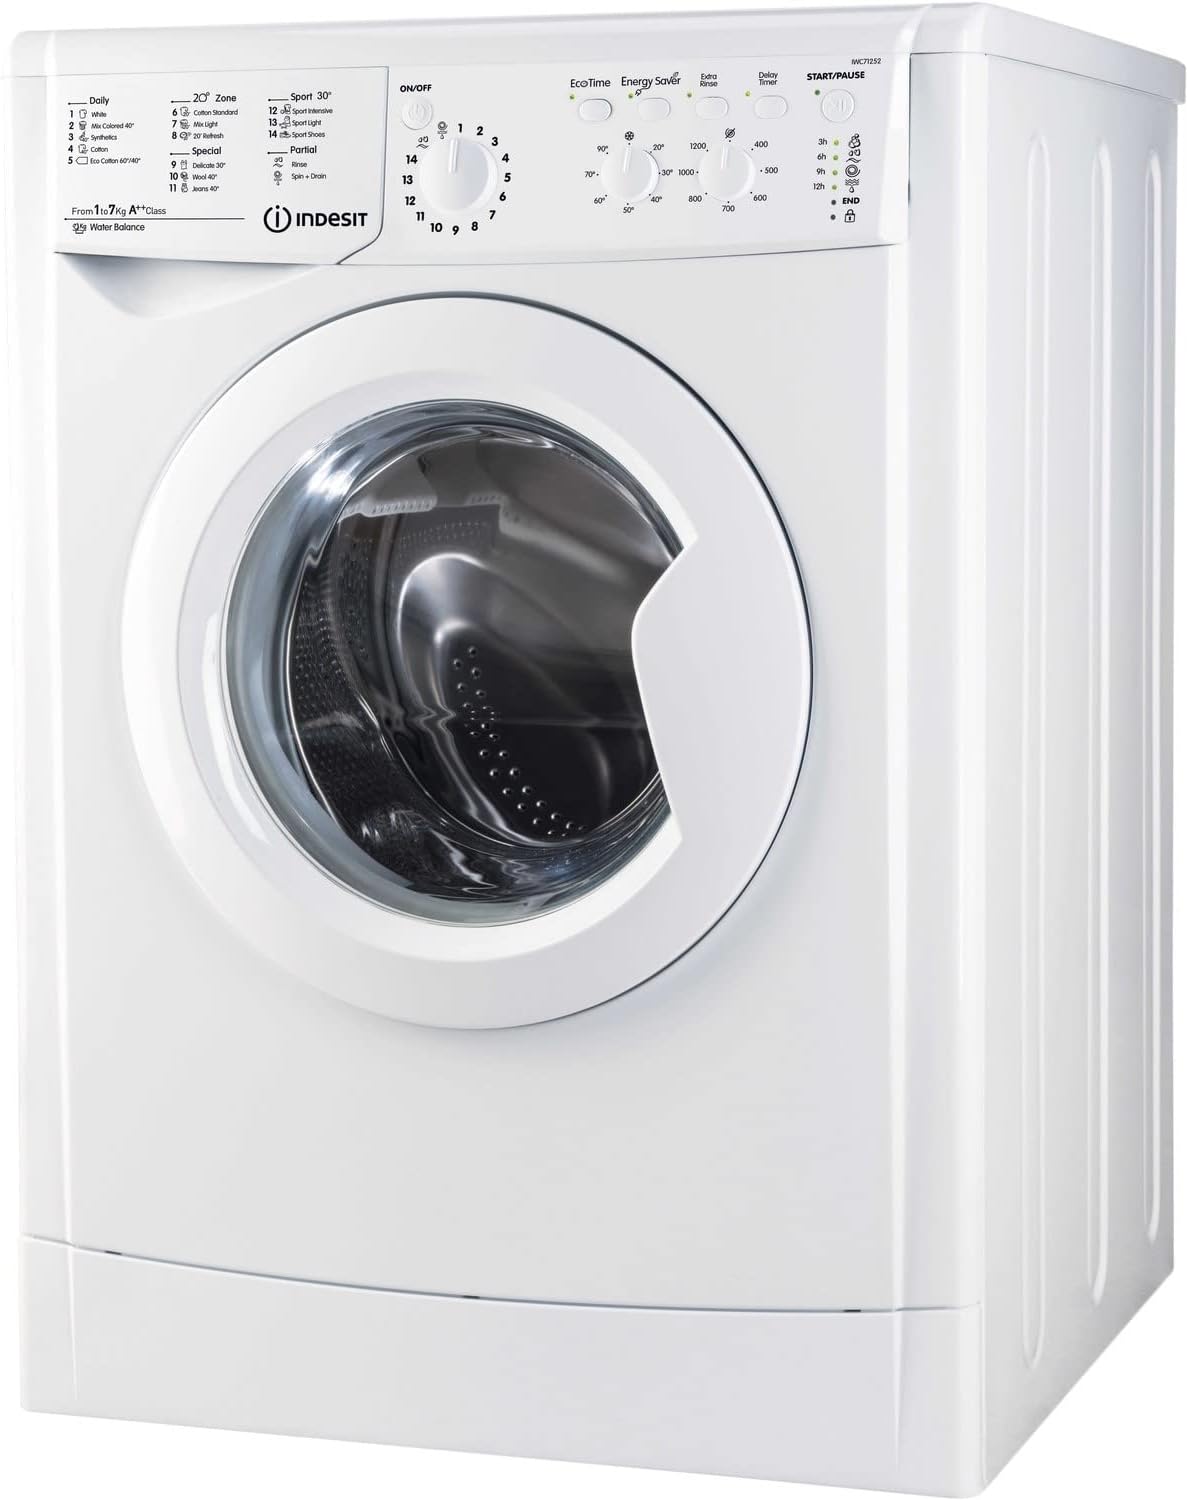 EcoTime 7kg Washing Machine Review